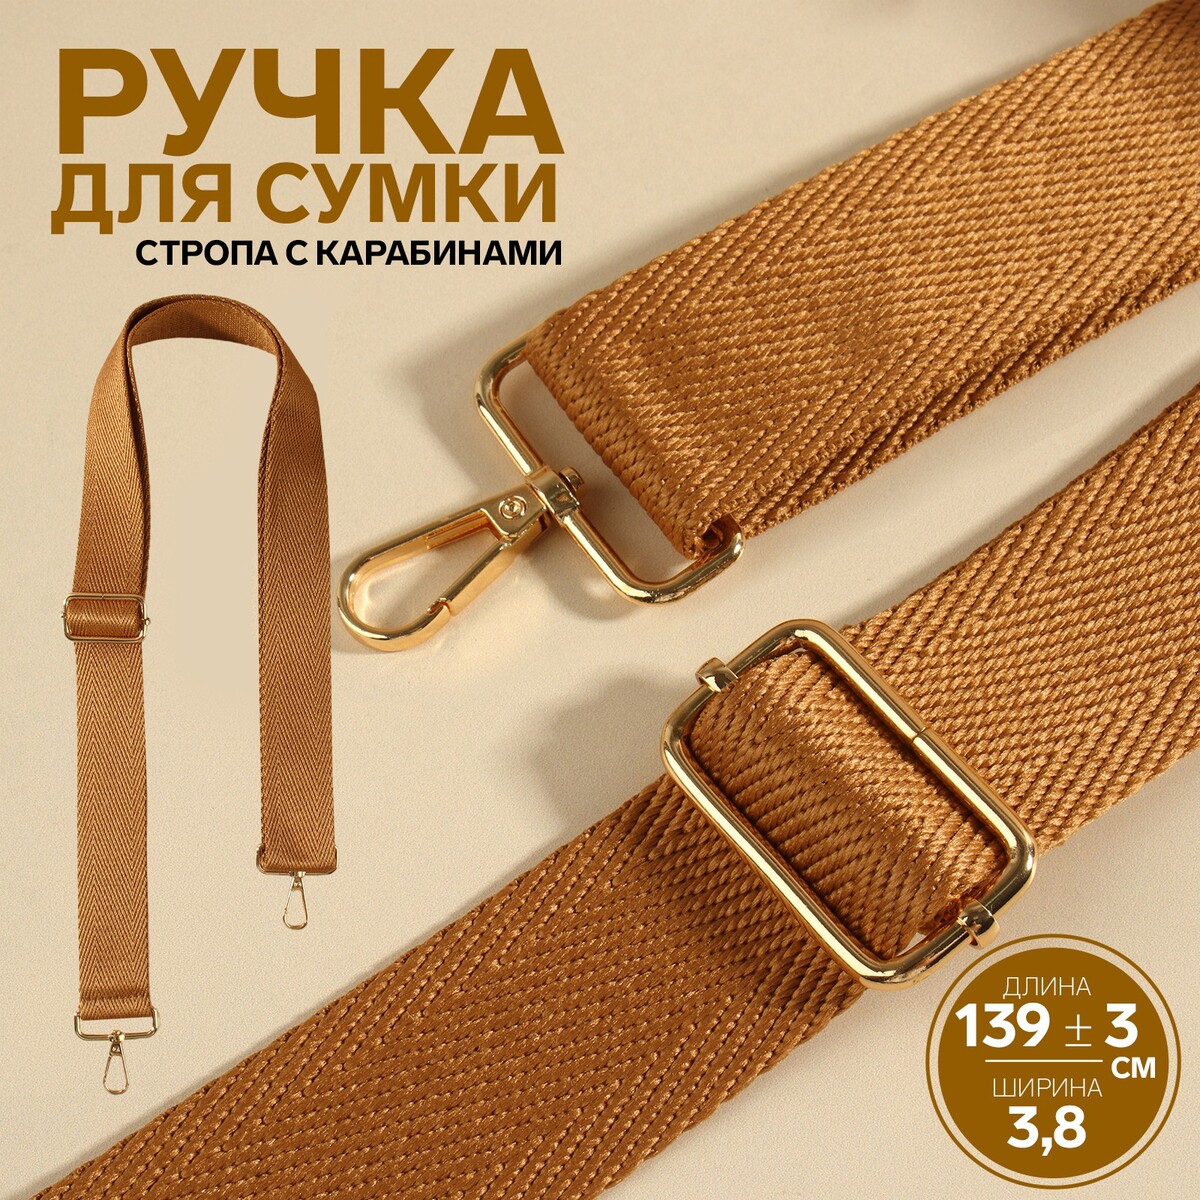 Ручка для сумки, стропа, с карабинами, 139 ± 3 × 3,8 см, цвет светло-коричневый ручка для сумки с карабинами 60 × 2 см светло коричневый